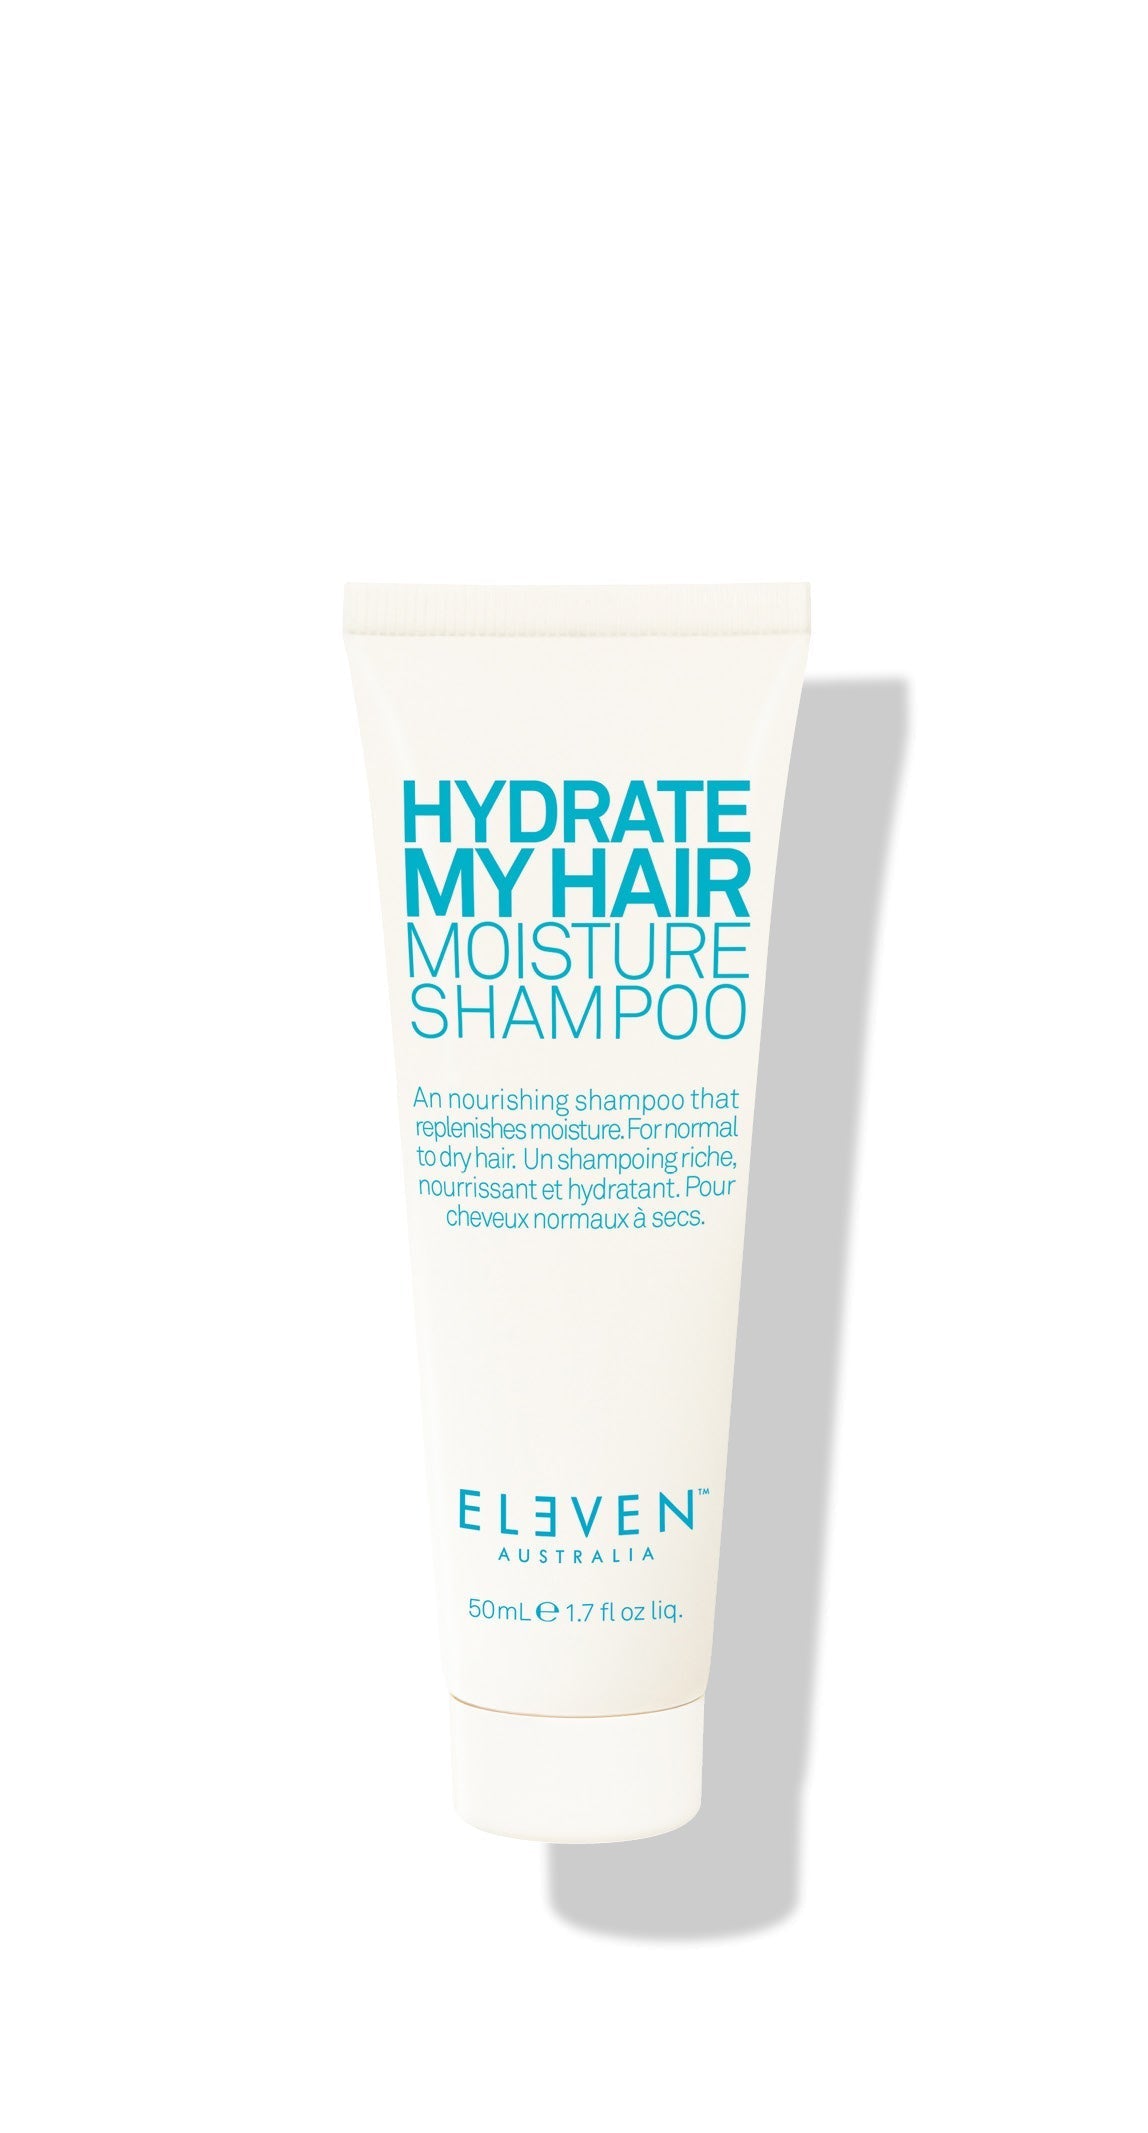 Hydrate My Hair Moisture Shampoo - 50ml - ELEVEN Australia